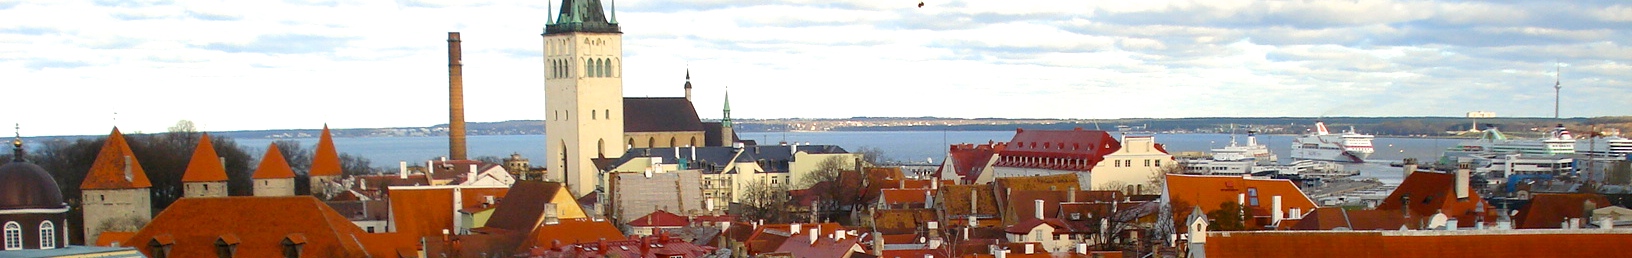 Tallinn 02